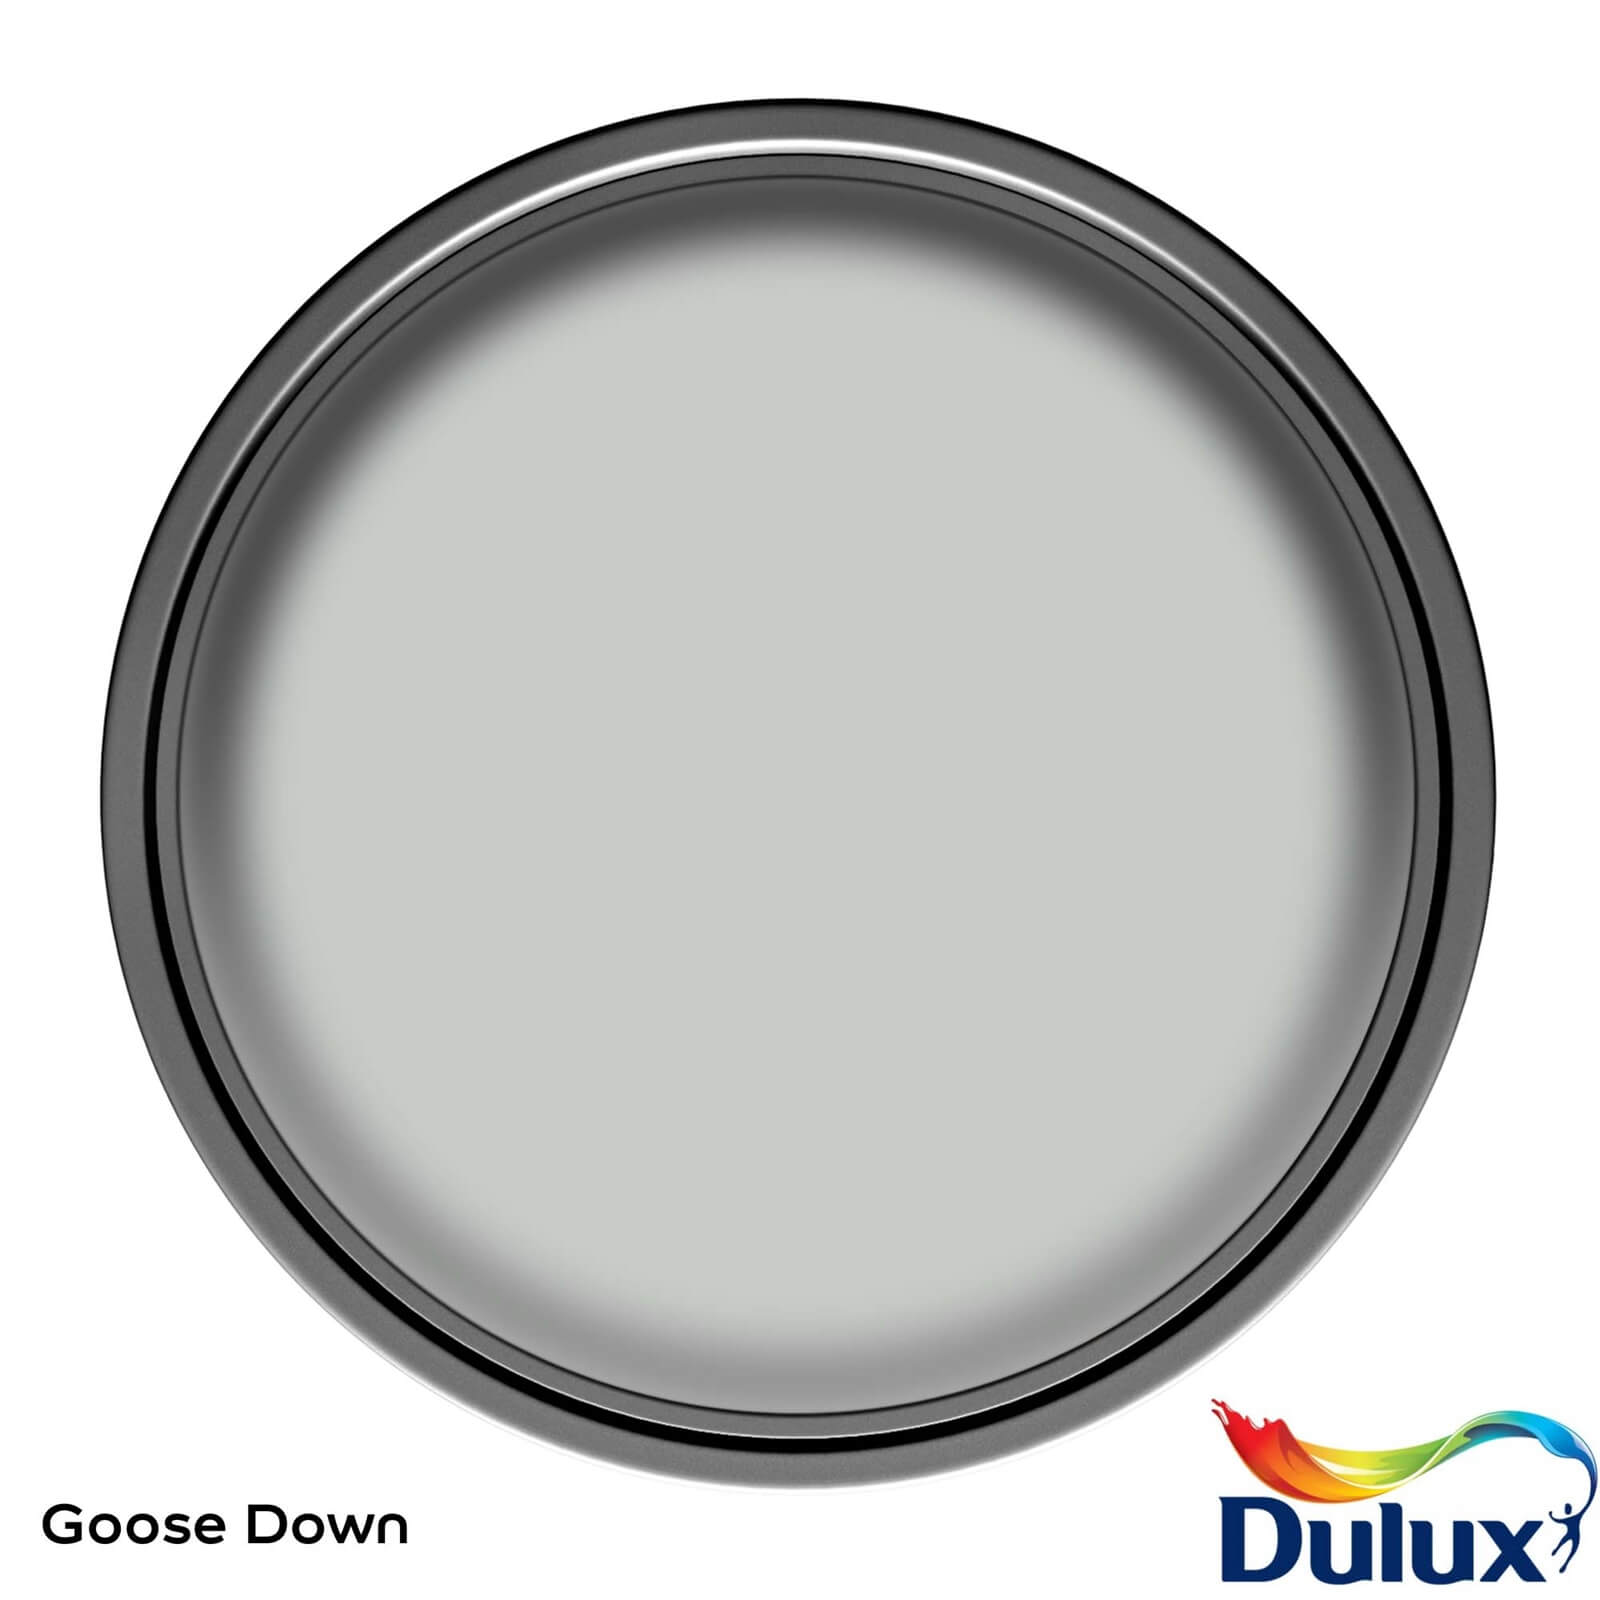 Dulux Quick Dry Satinwood Paint Goose Down - 750ml